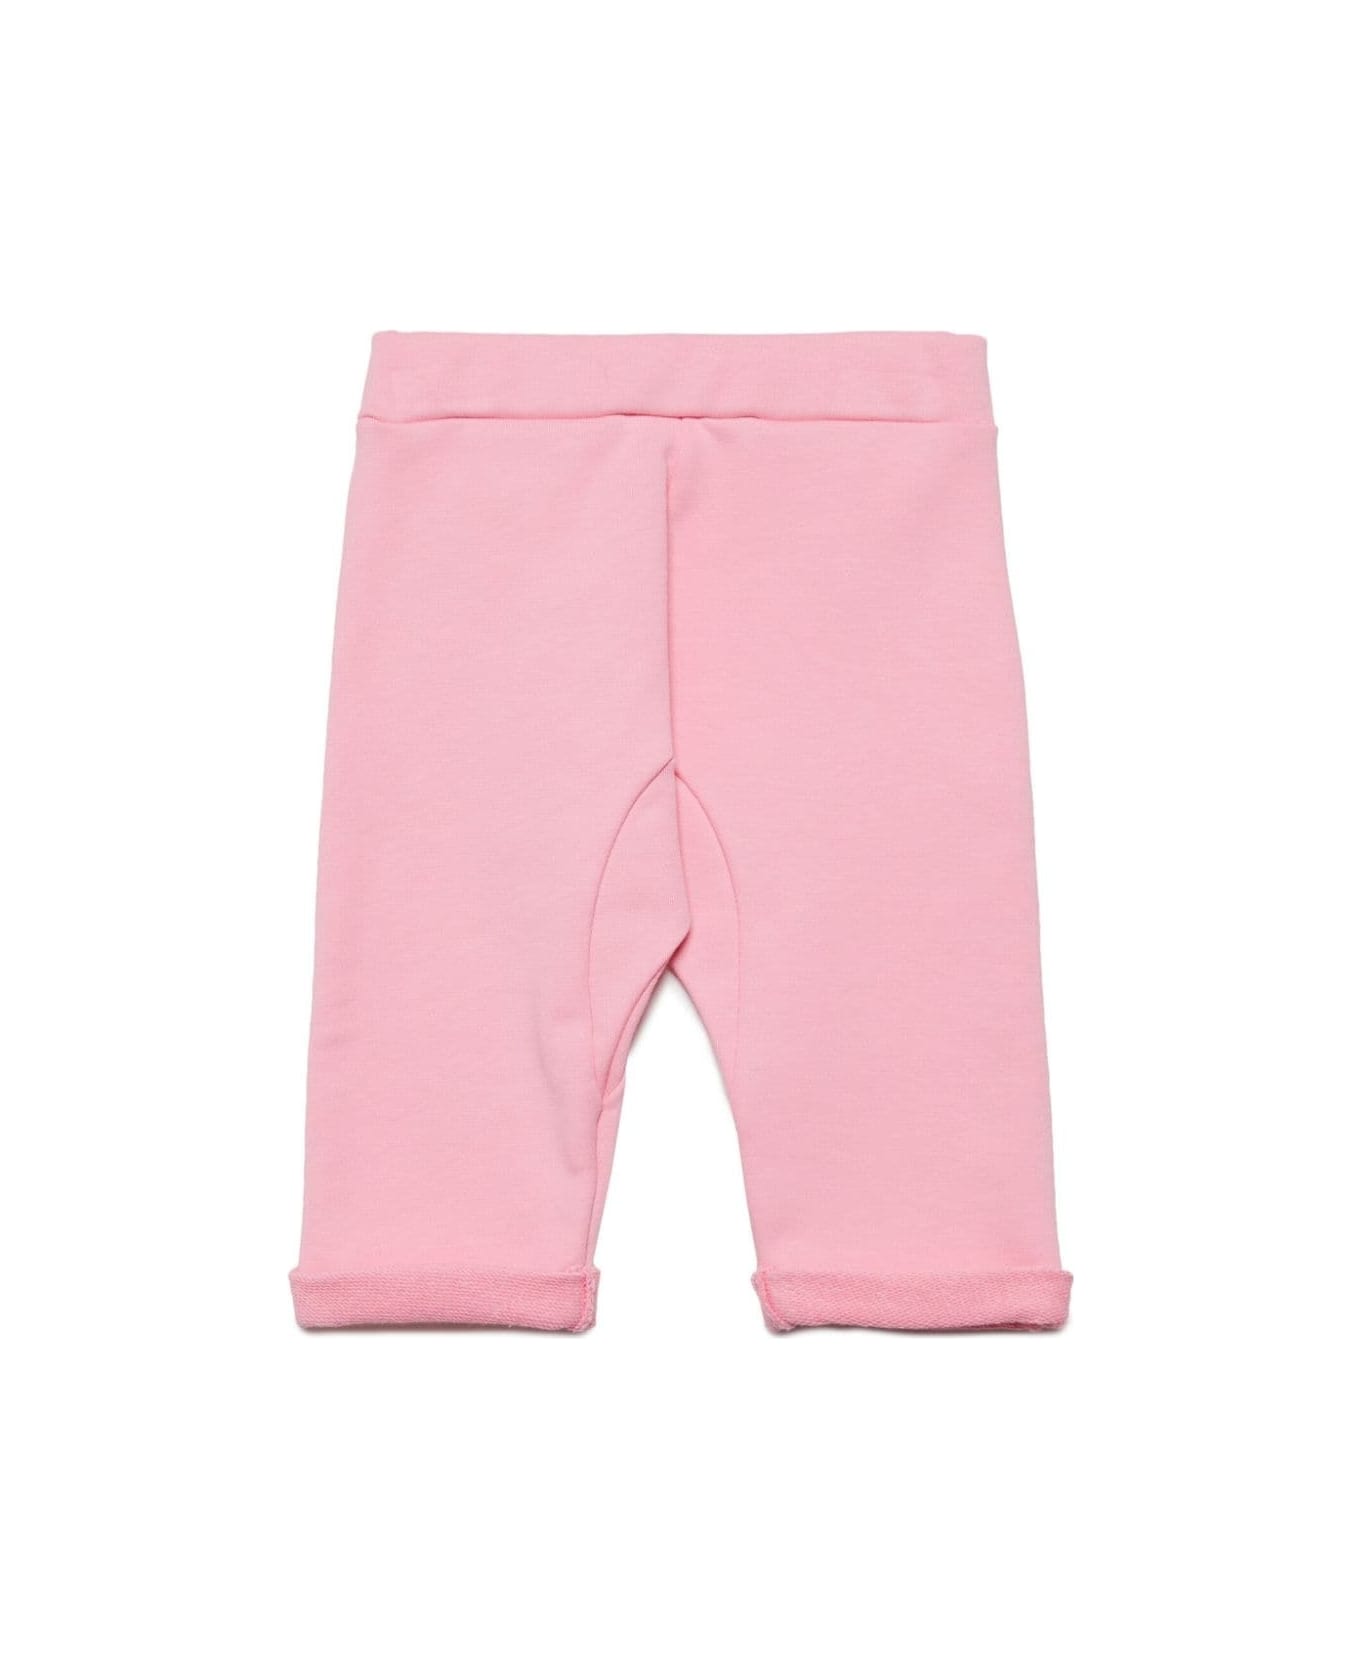 Marni Pantaloni Neonato - Pink ボトムス